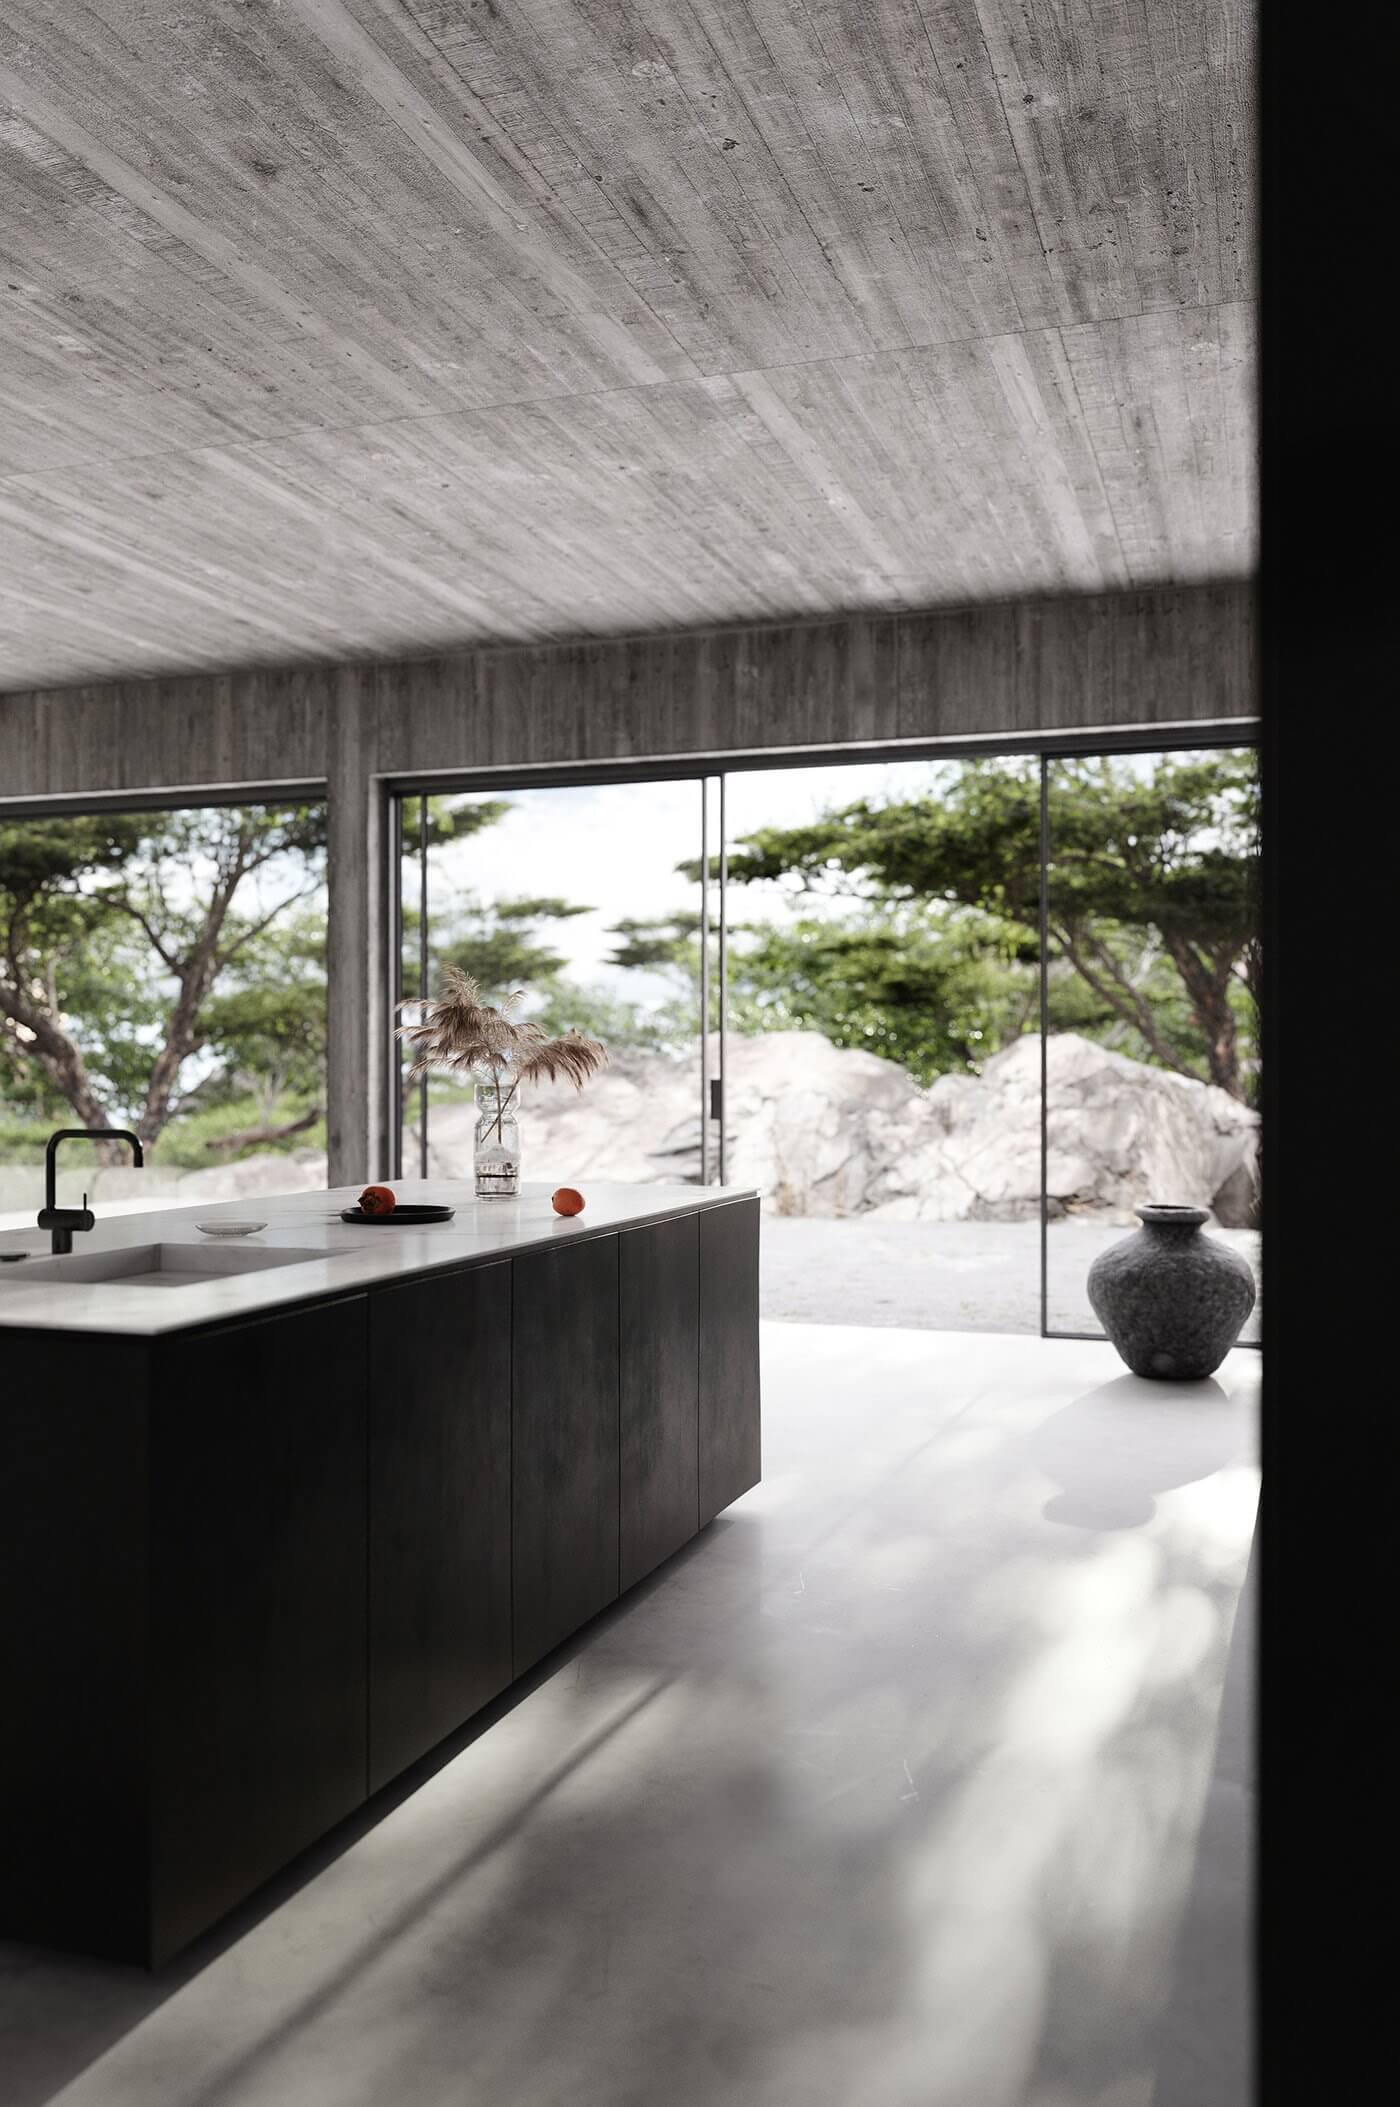 In praise of shadows house kitchen block design marble dark wood - cgi visualizations